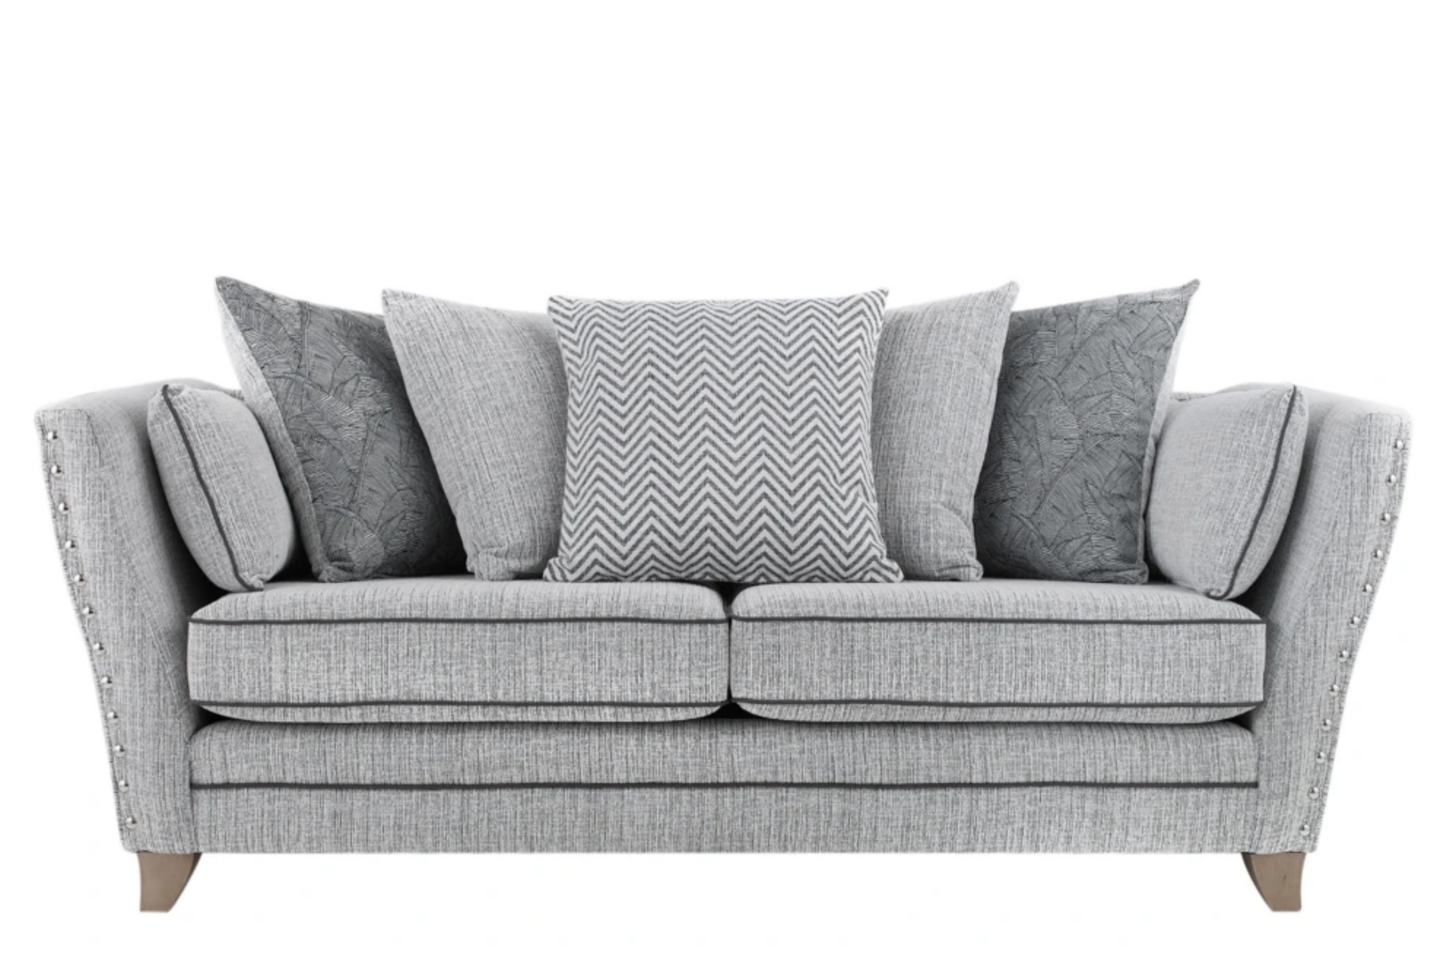 The Izabel Range - 3 Seater Sofa